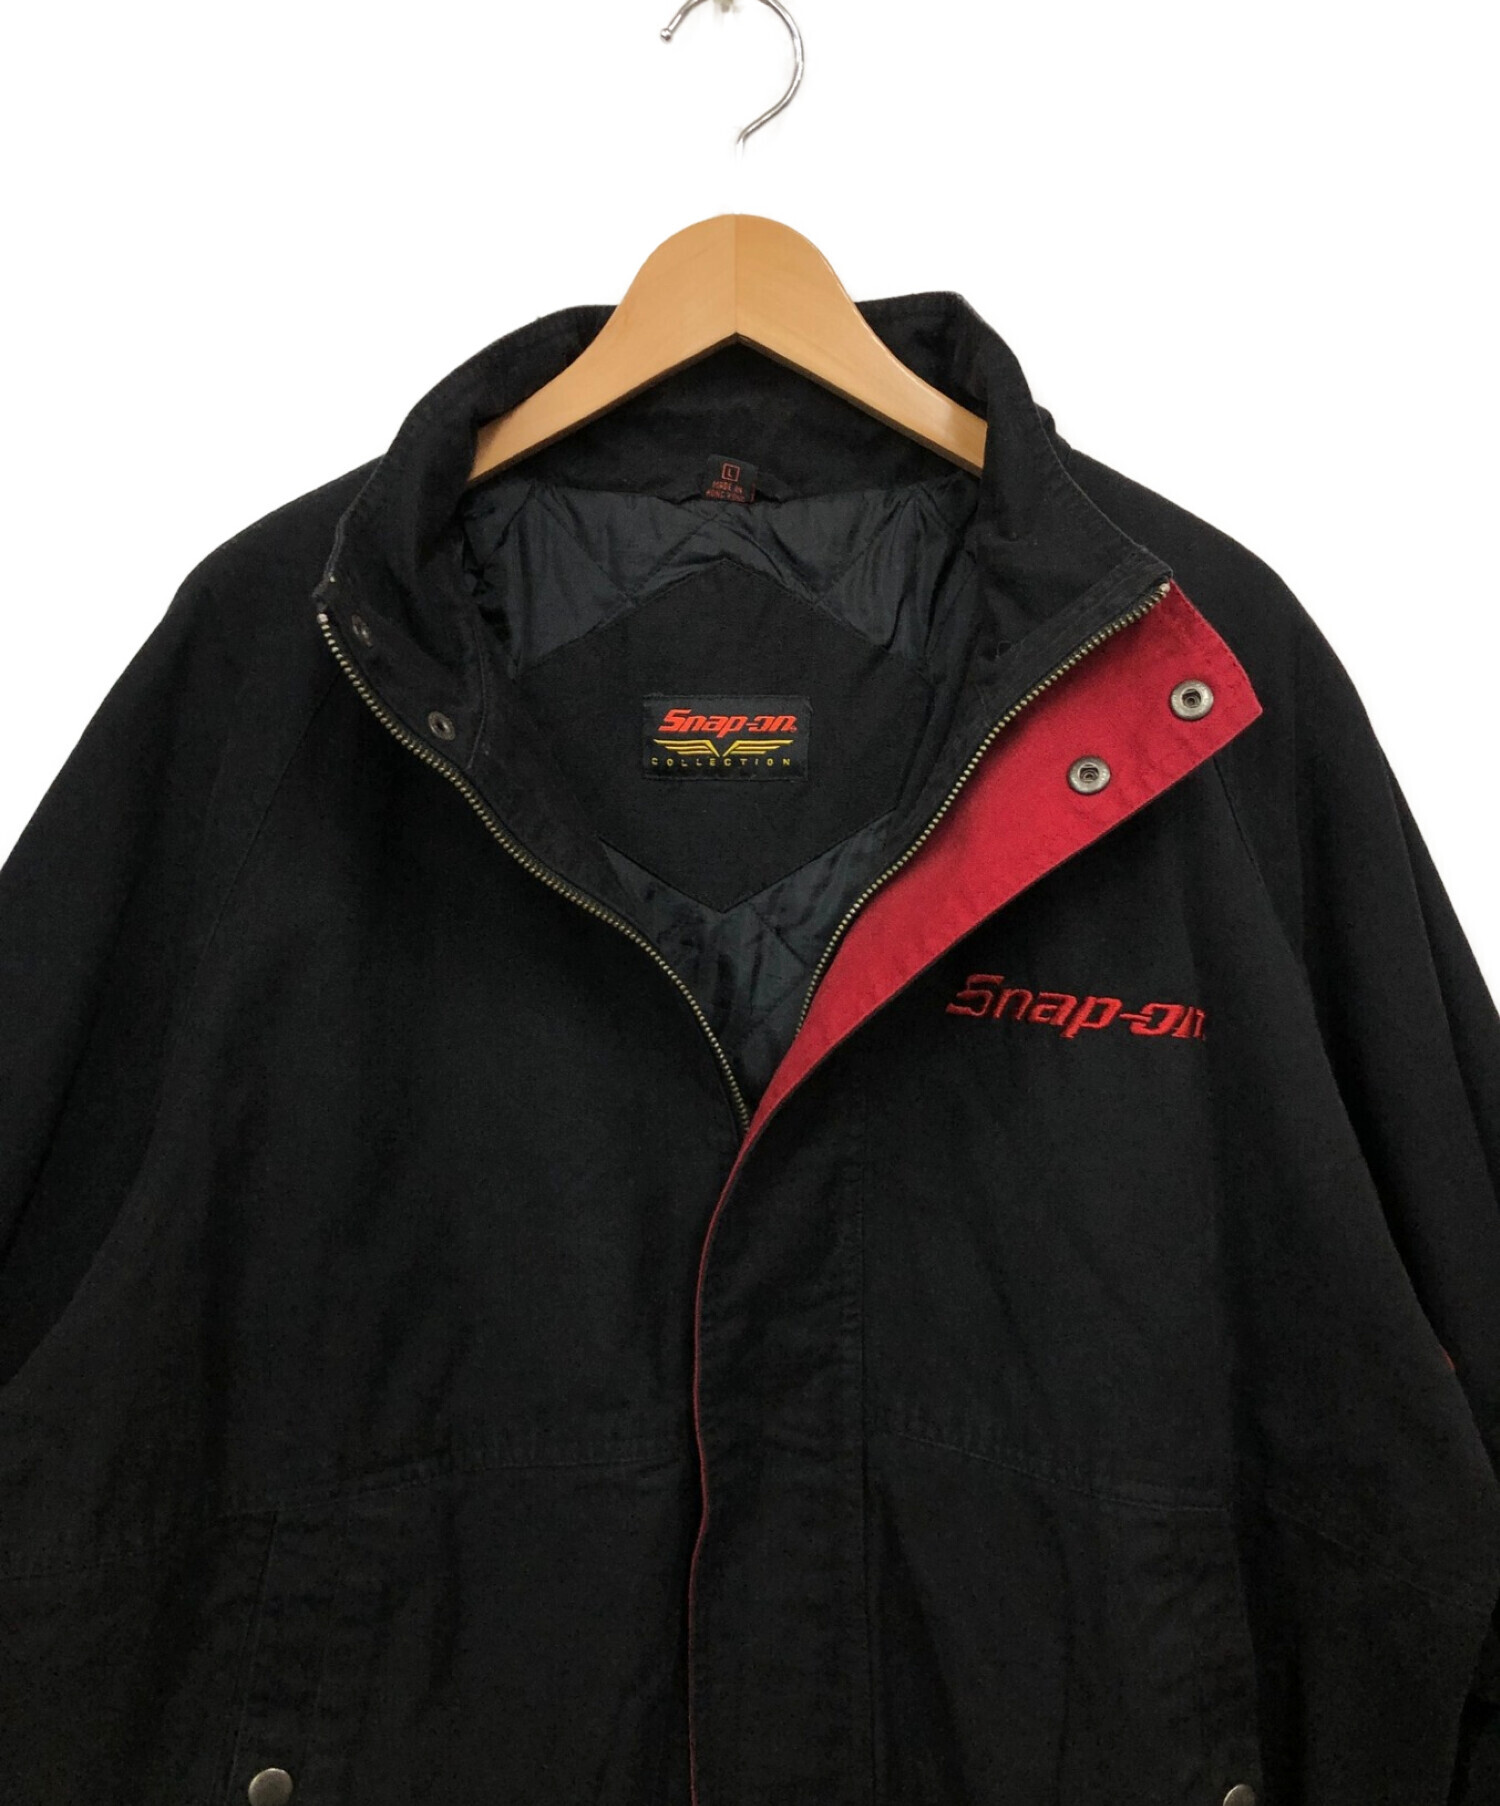 Snap-on レーシングジャケット Lサイズ ジャンパー ブルゾン 黒×赤 